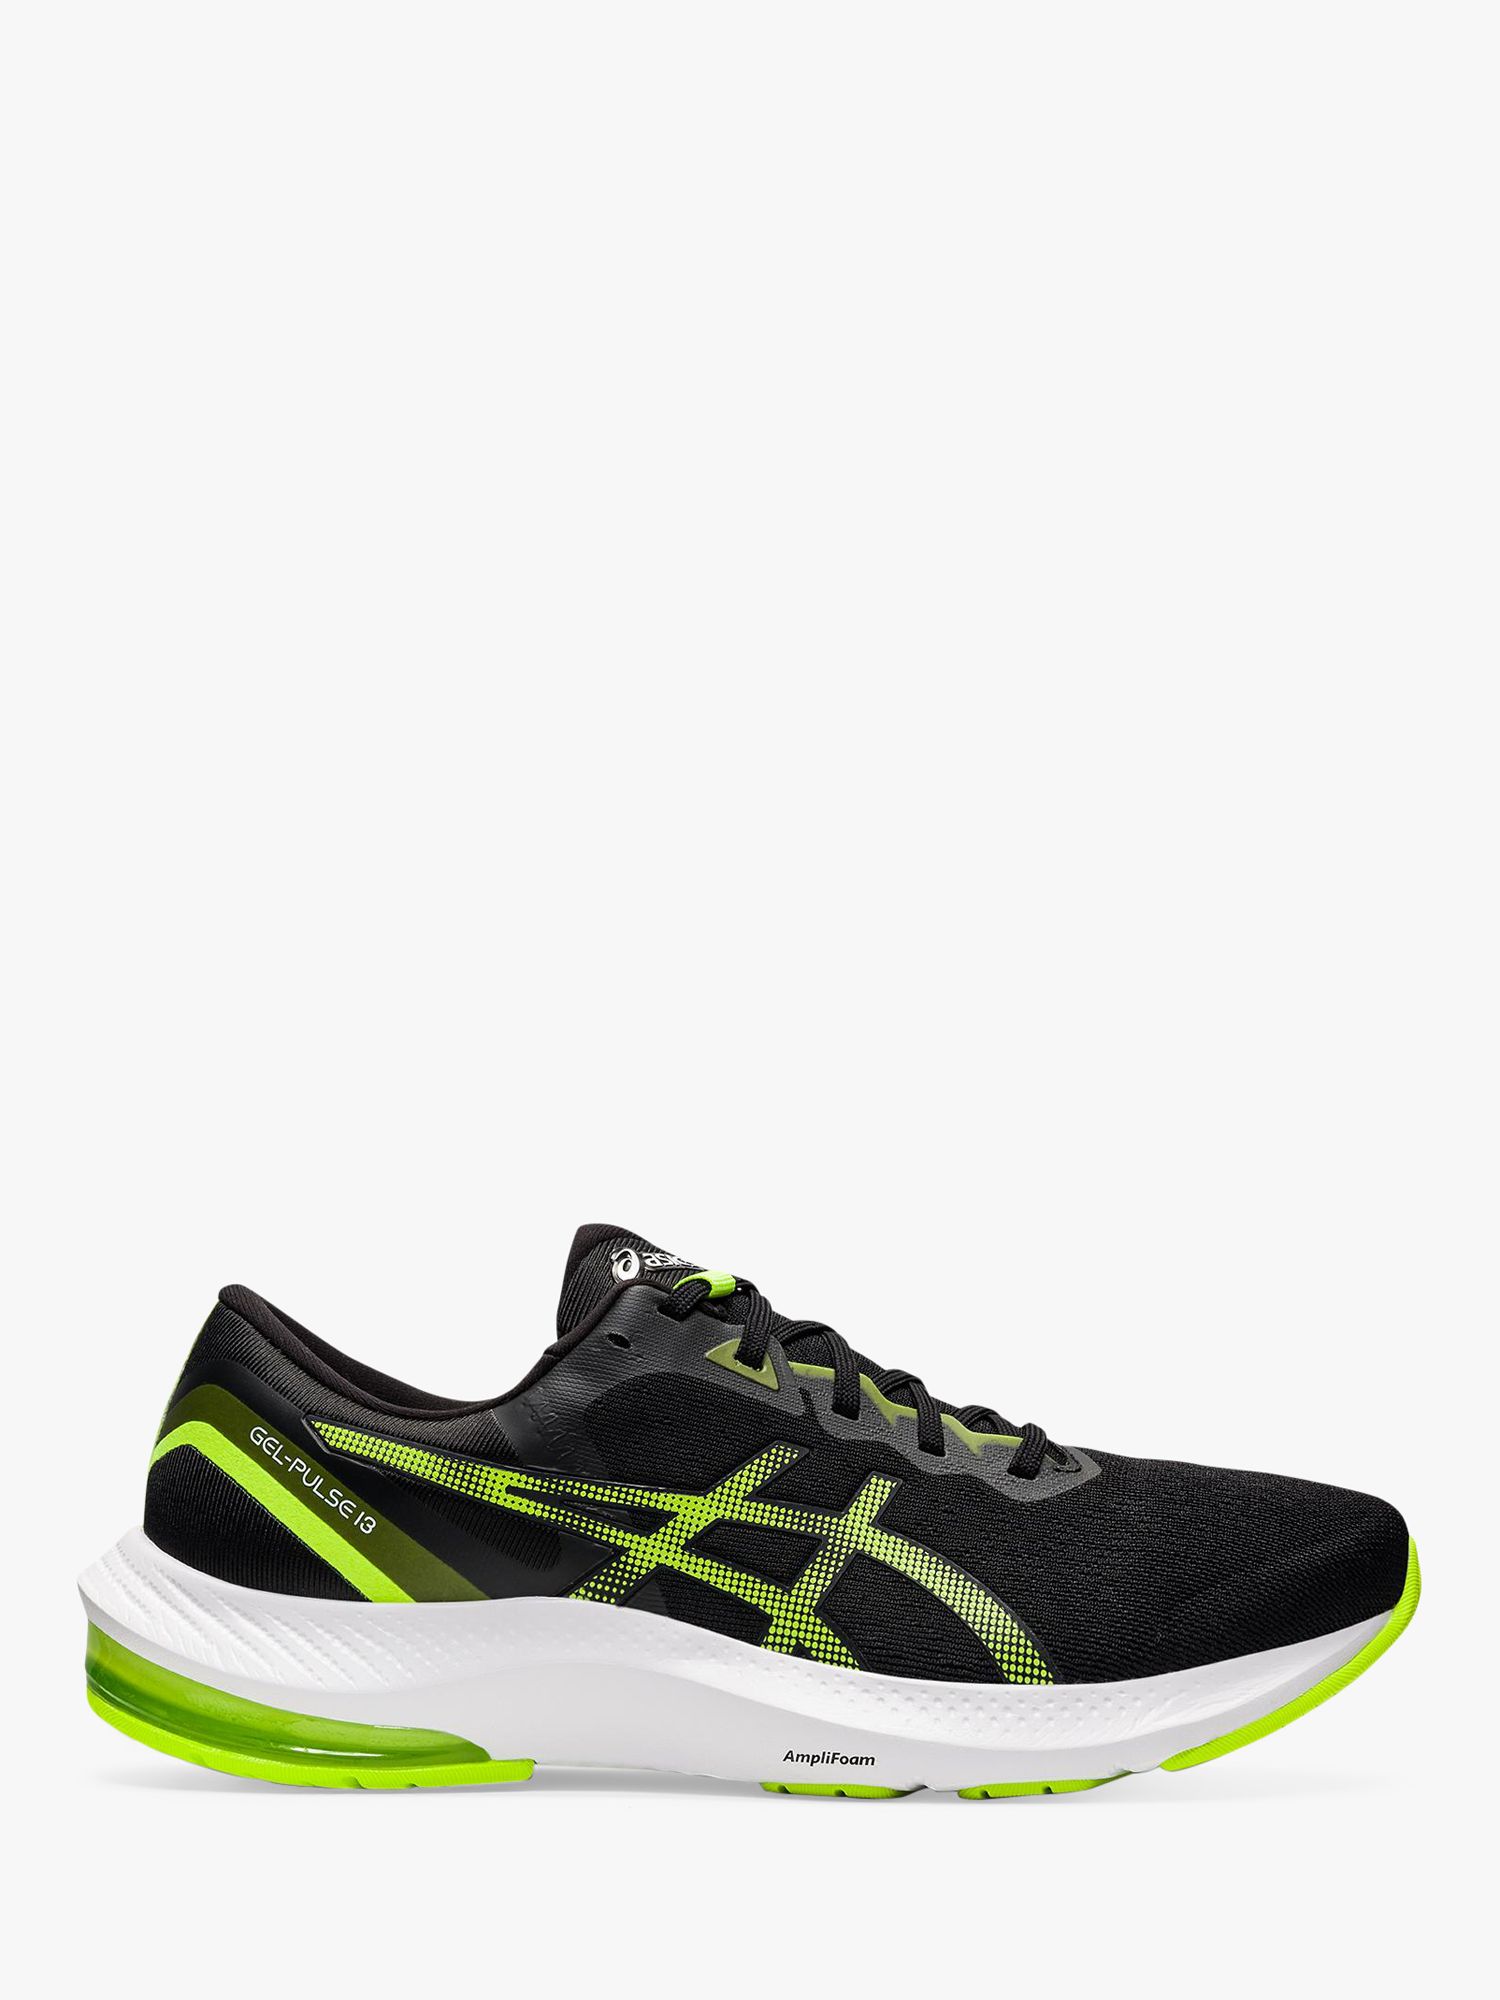 ASICS GEL-PULSE 13 Men's Running Shoes, Black/Hazard Green at John Lewis & Partners